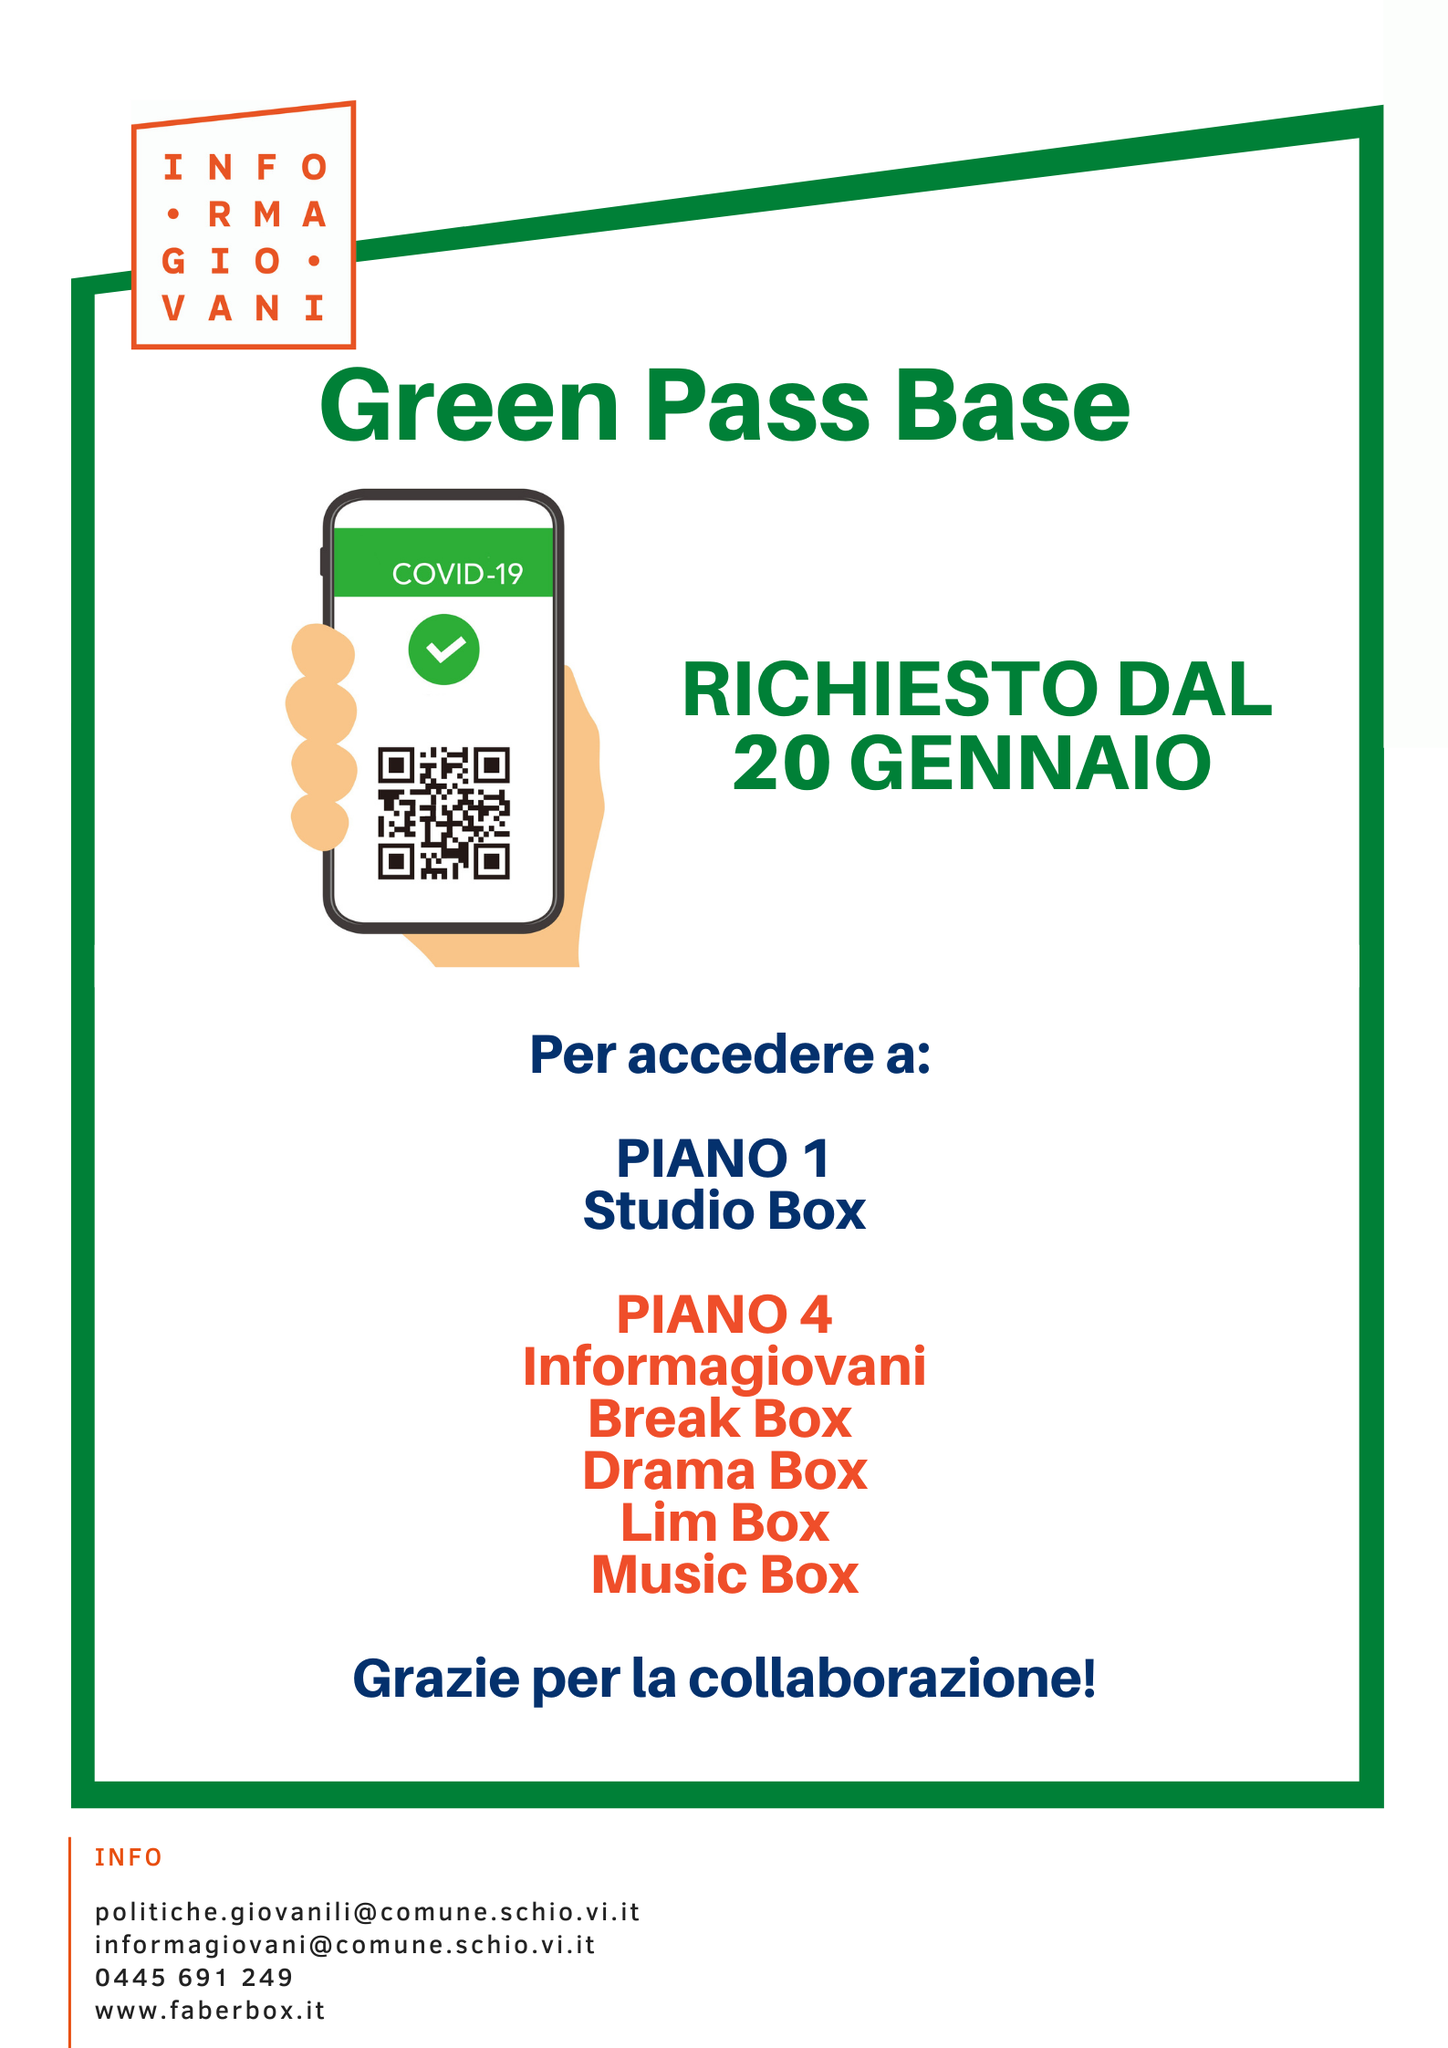 Green Pass Base obbligatorio